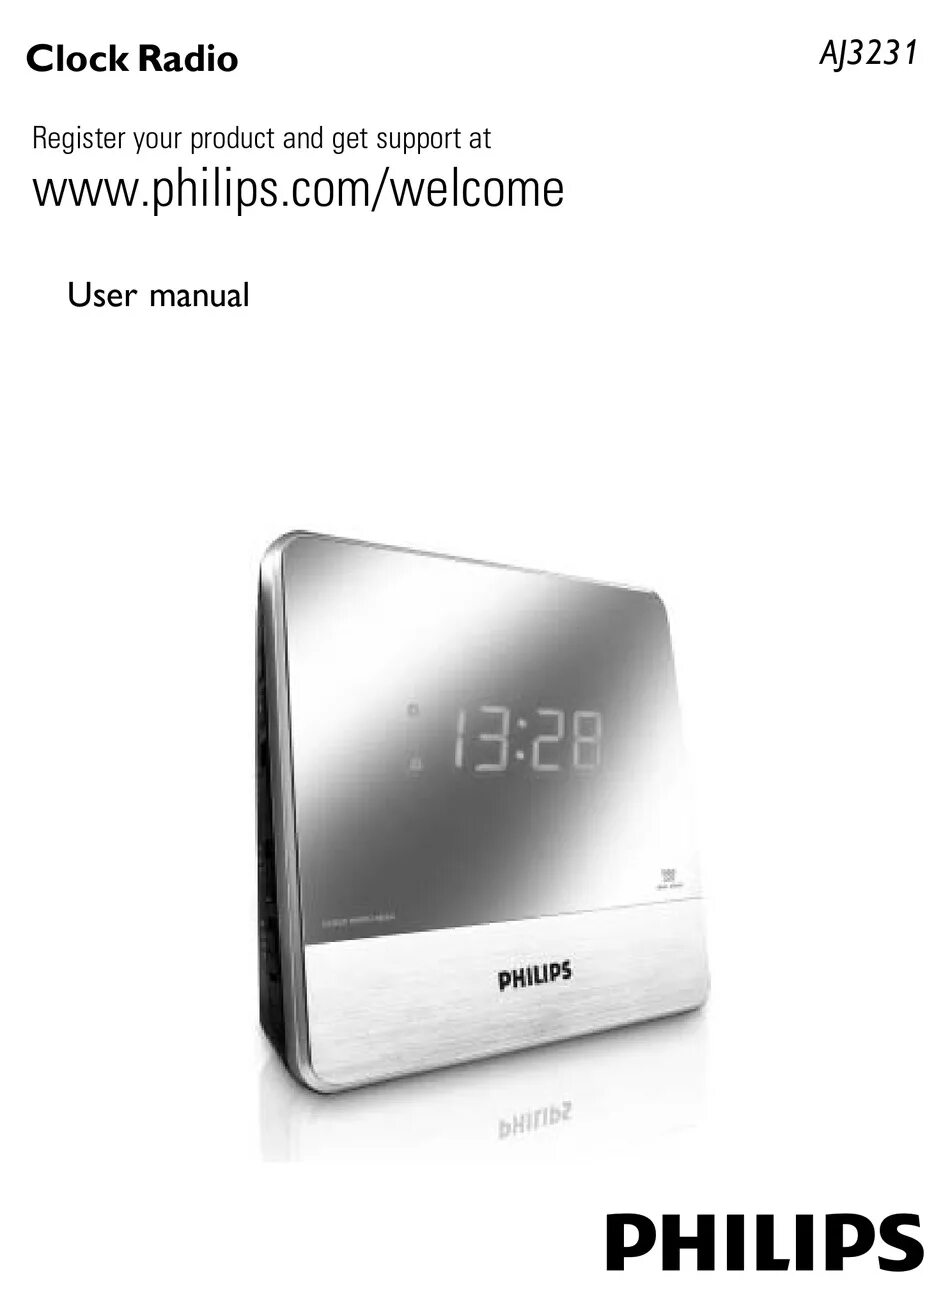 Philips Clock Radio aj3231. Philips AJ 3231. Philips aj3231/12. Радиоприемник Philips aj3231 12.